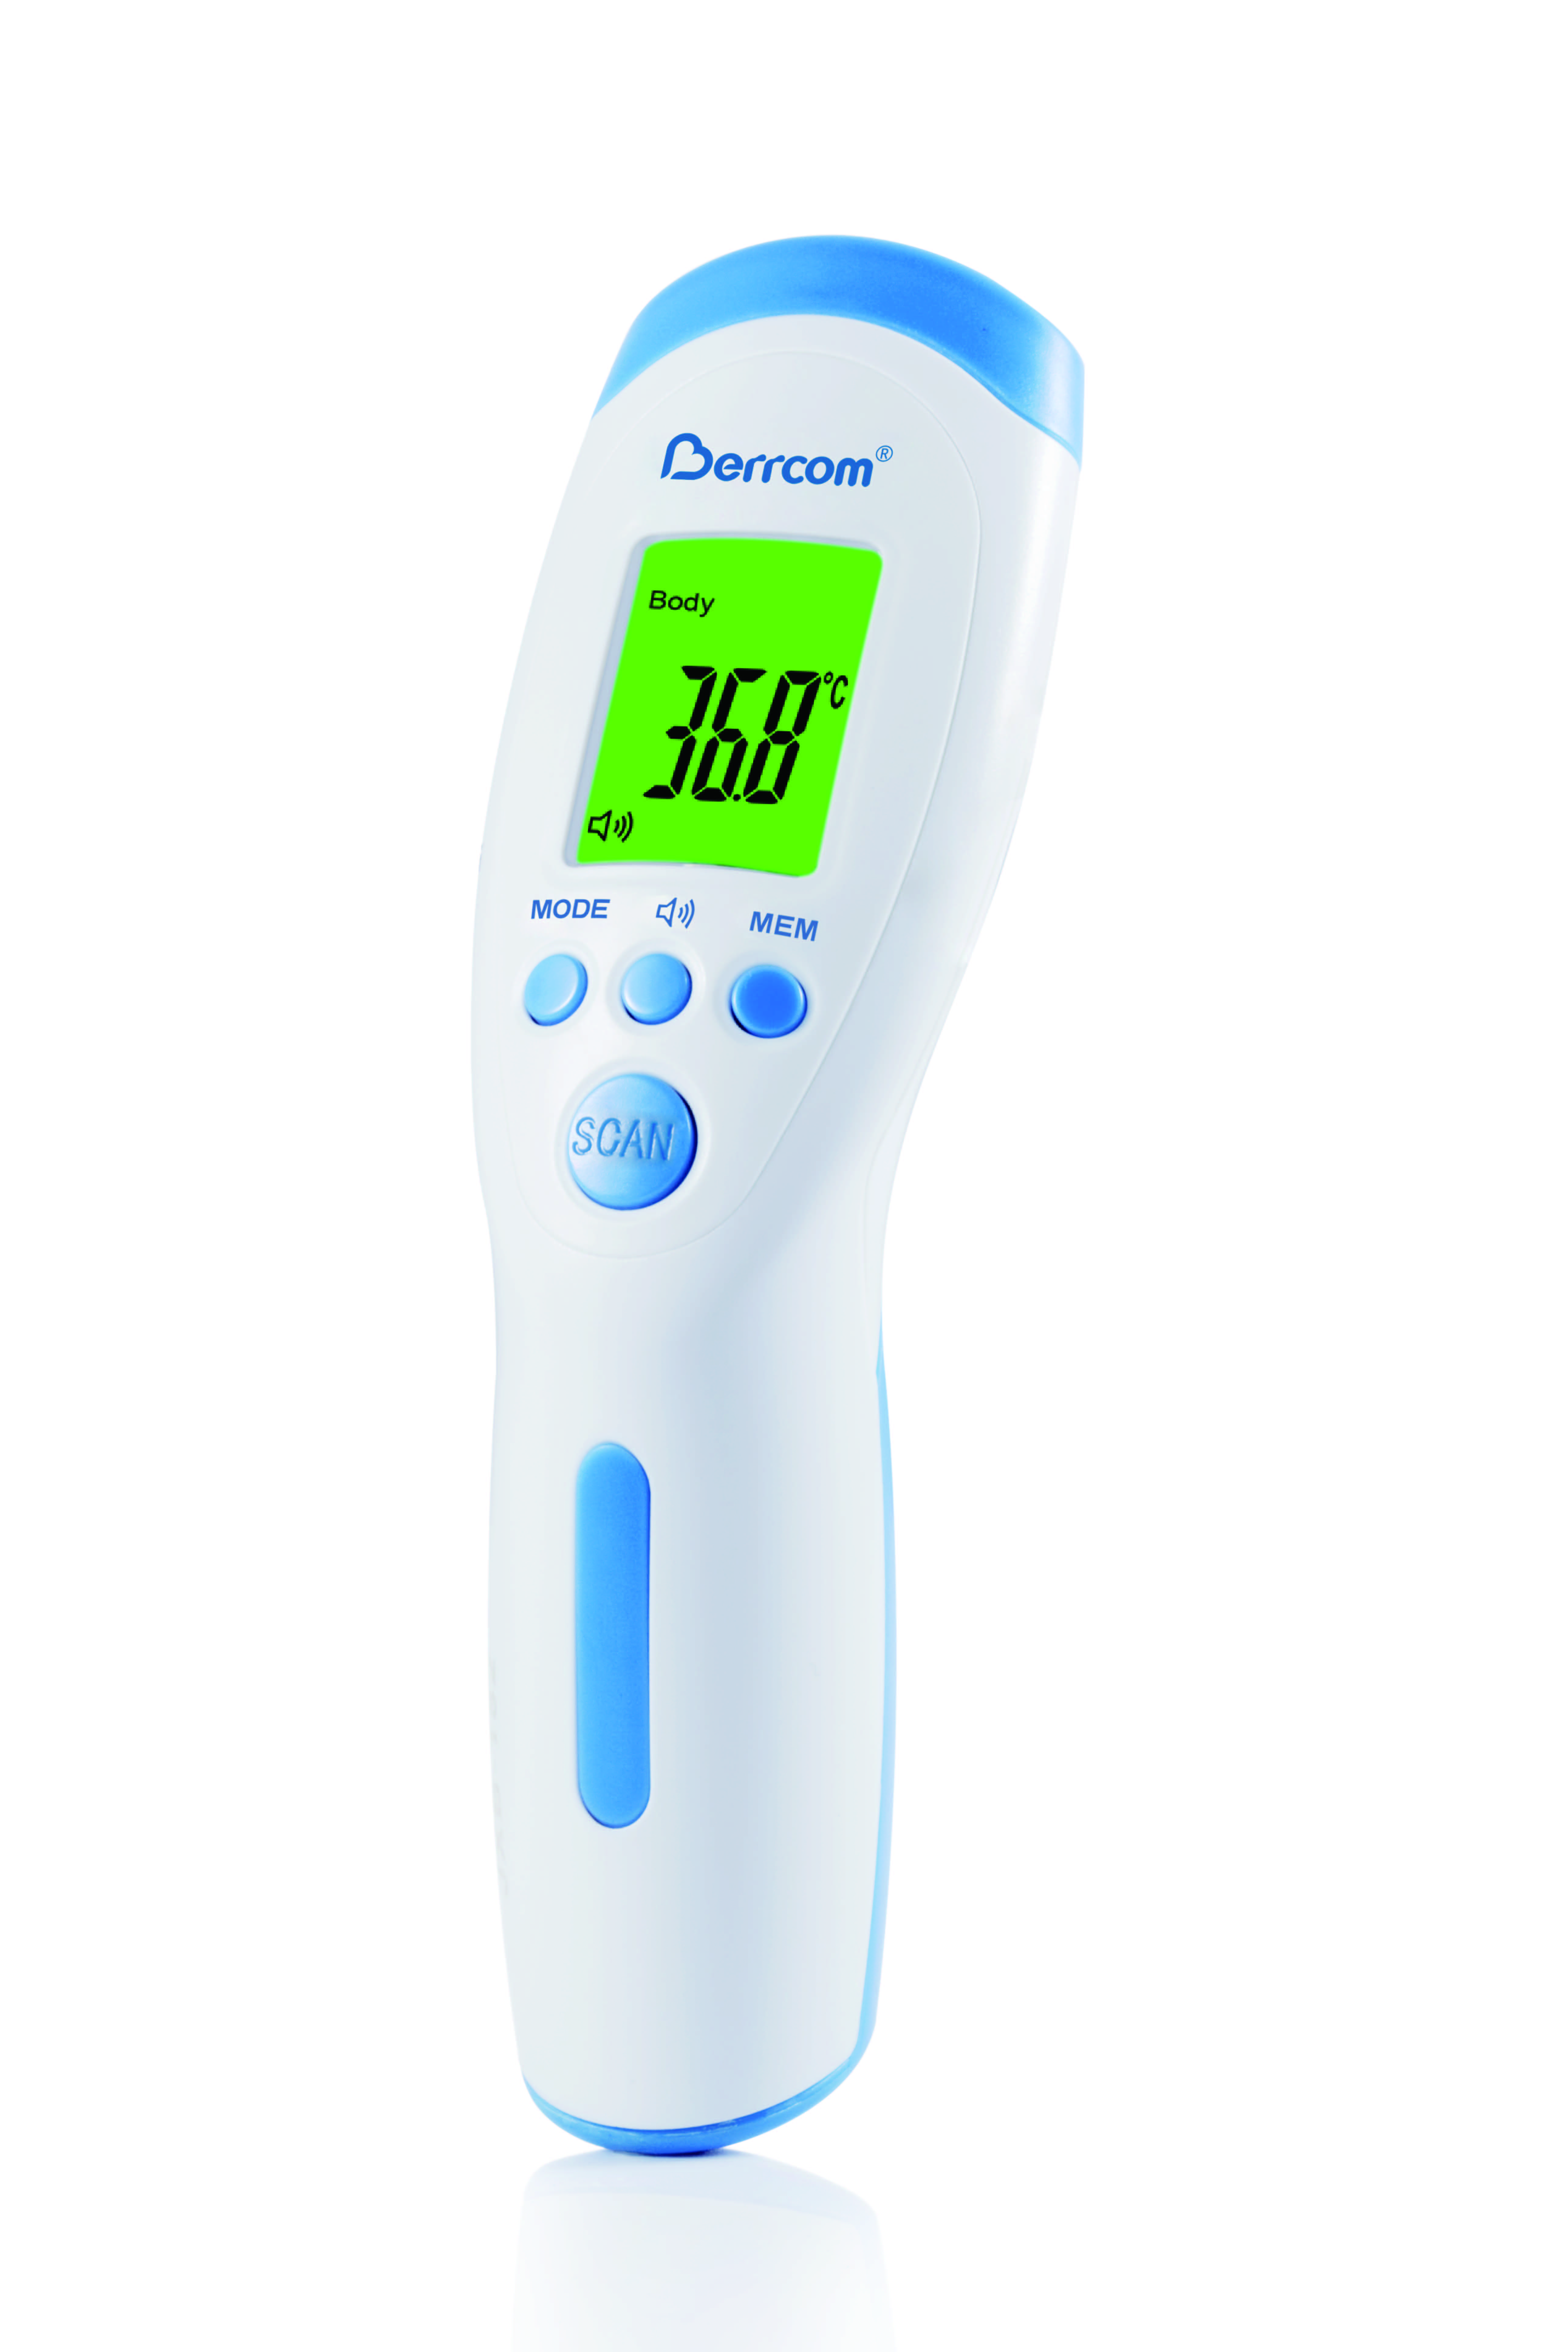 Thermomètre infrarouge Berrcom - Mesure sans contact - Écran LCD